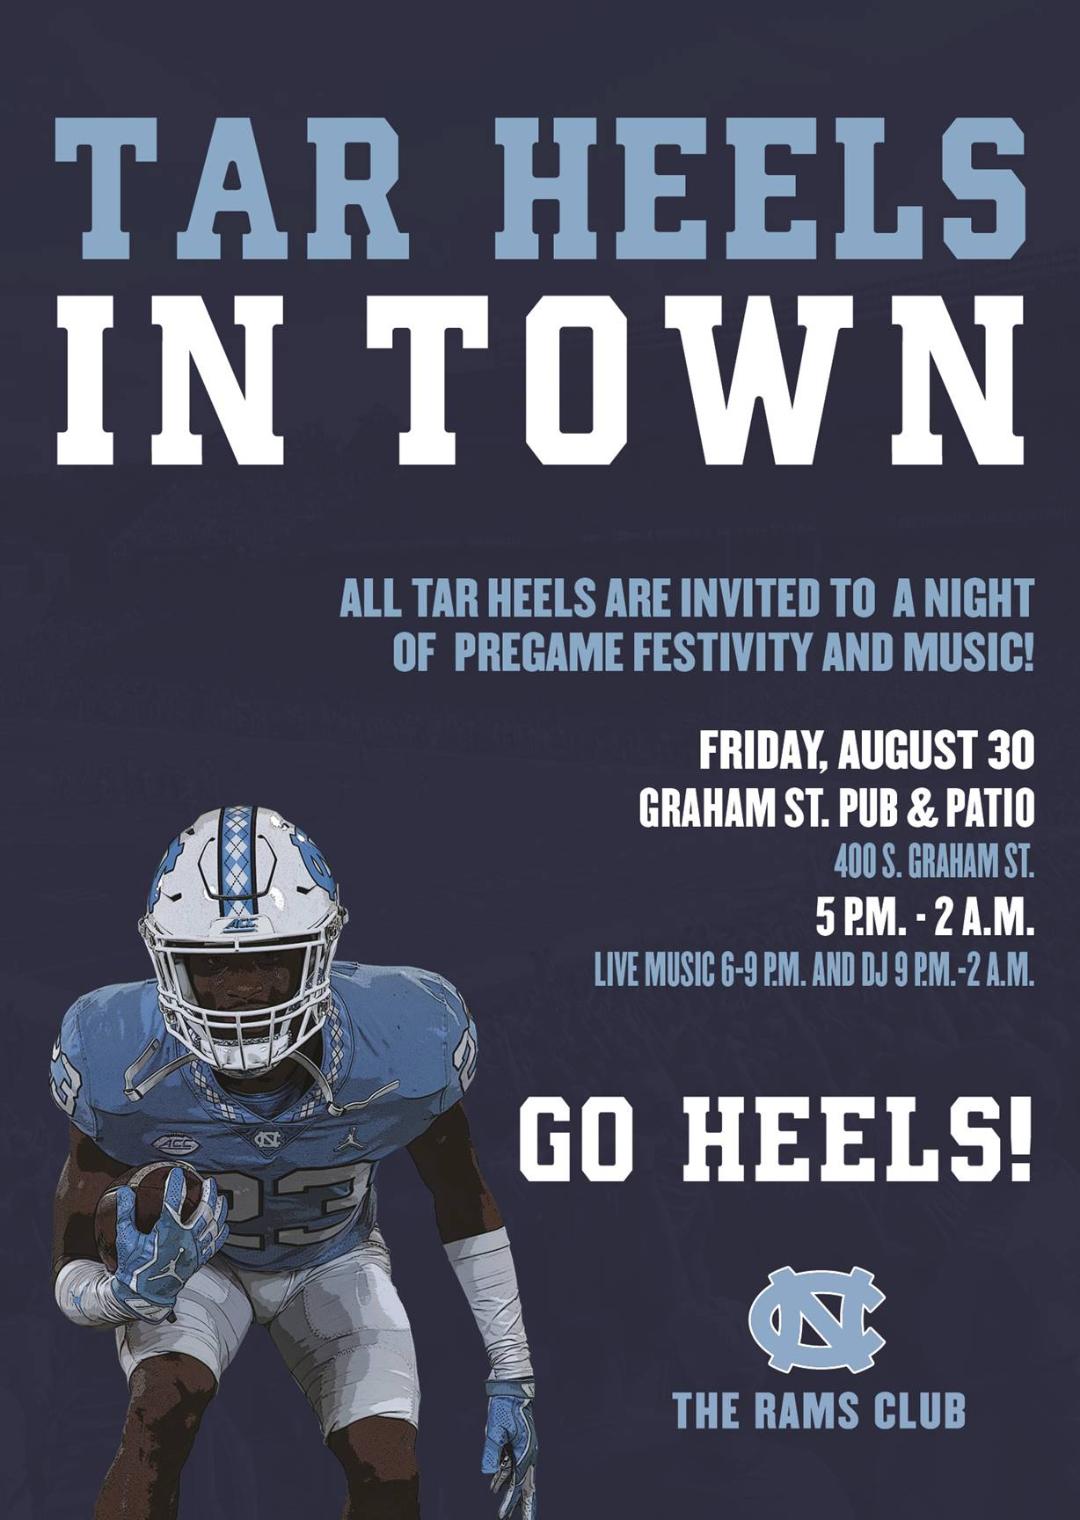 Tar Heels in Town - Grant St. Pub & Patio (Aug 30)